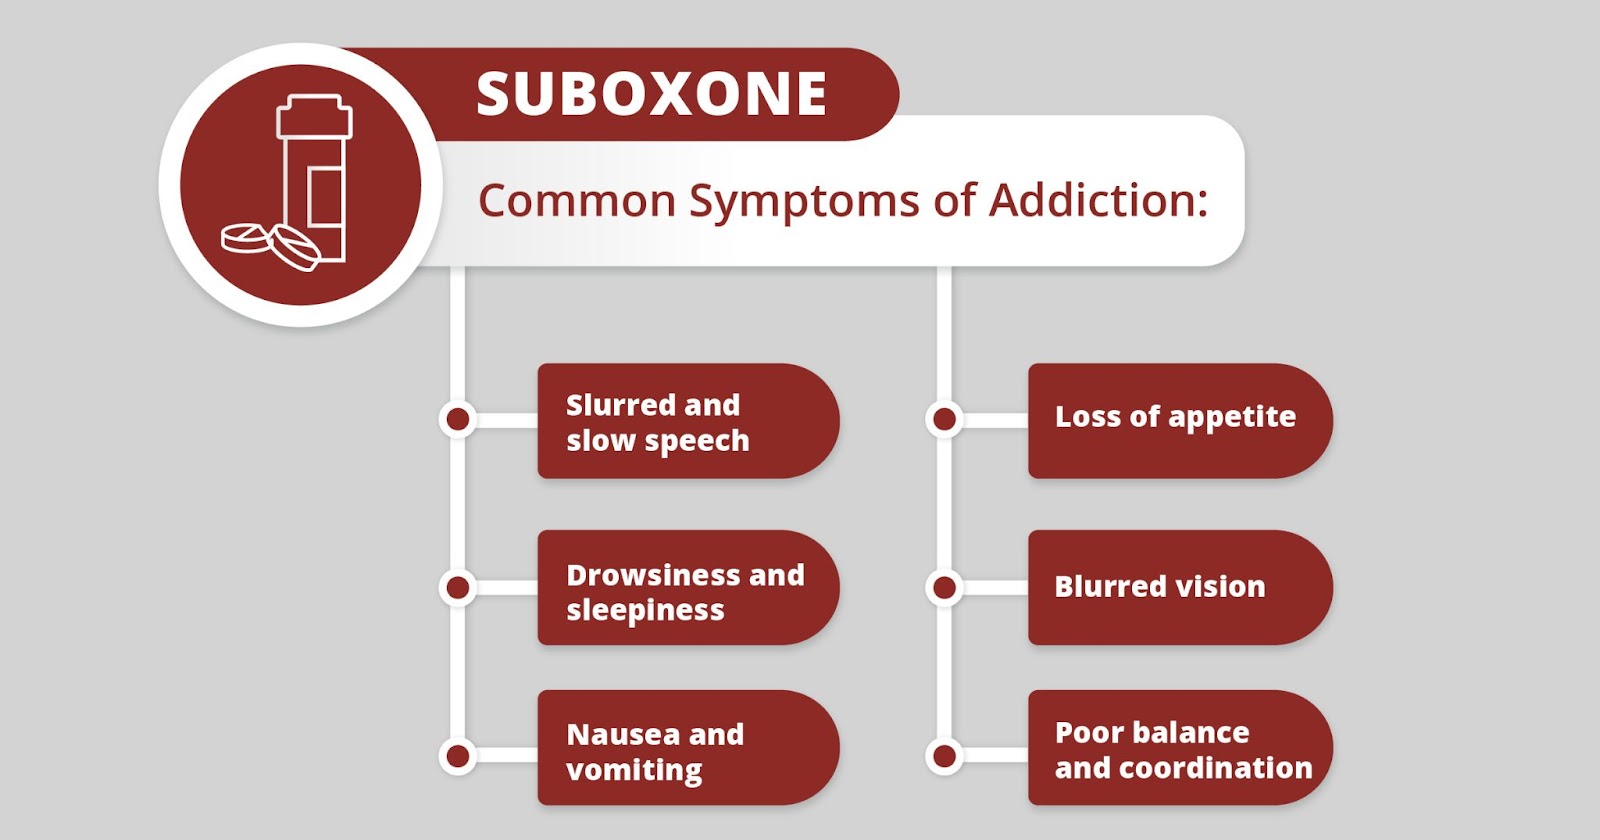 Suboxone common symptoms of addiction